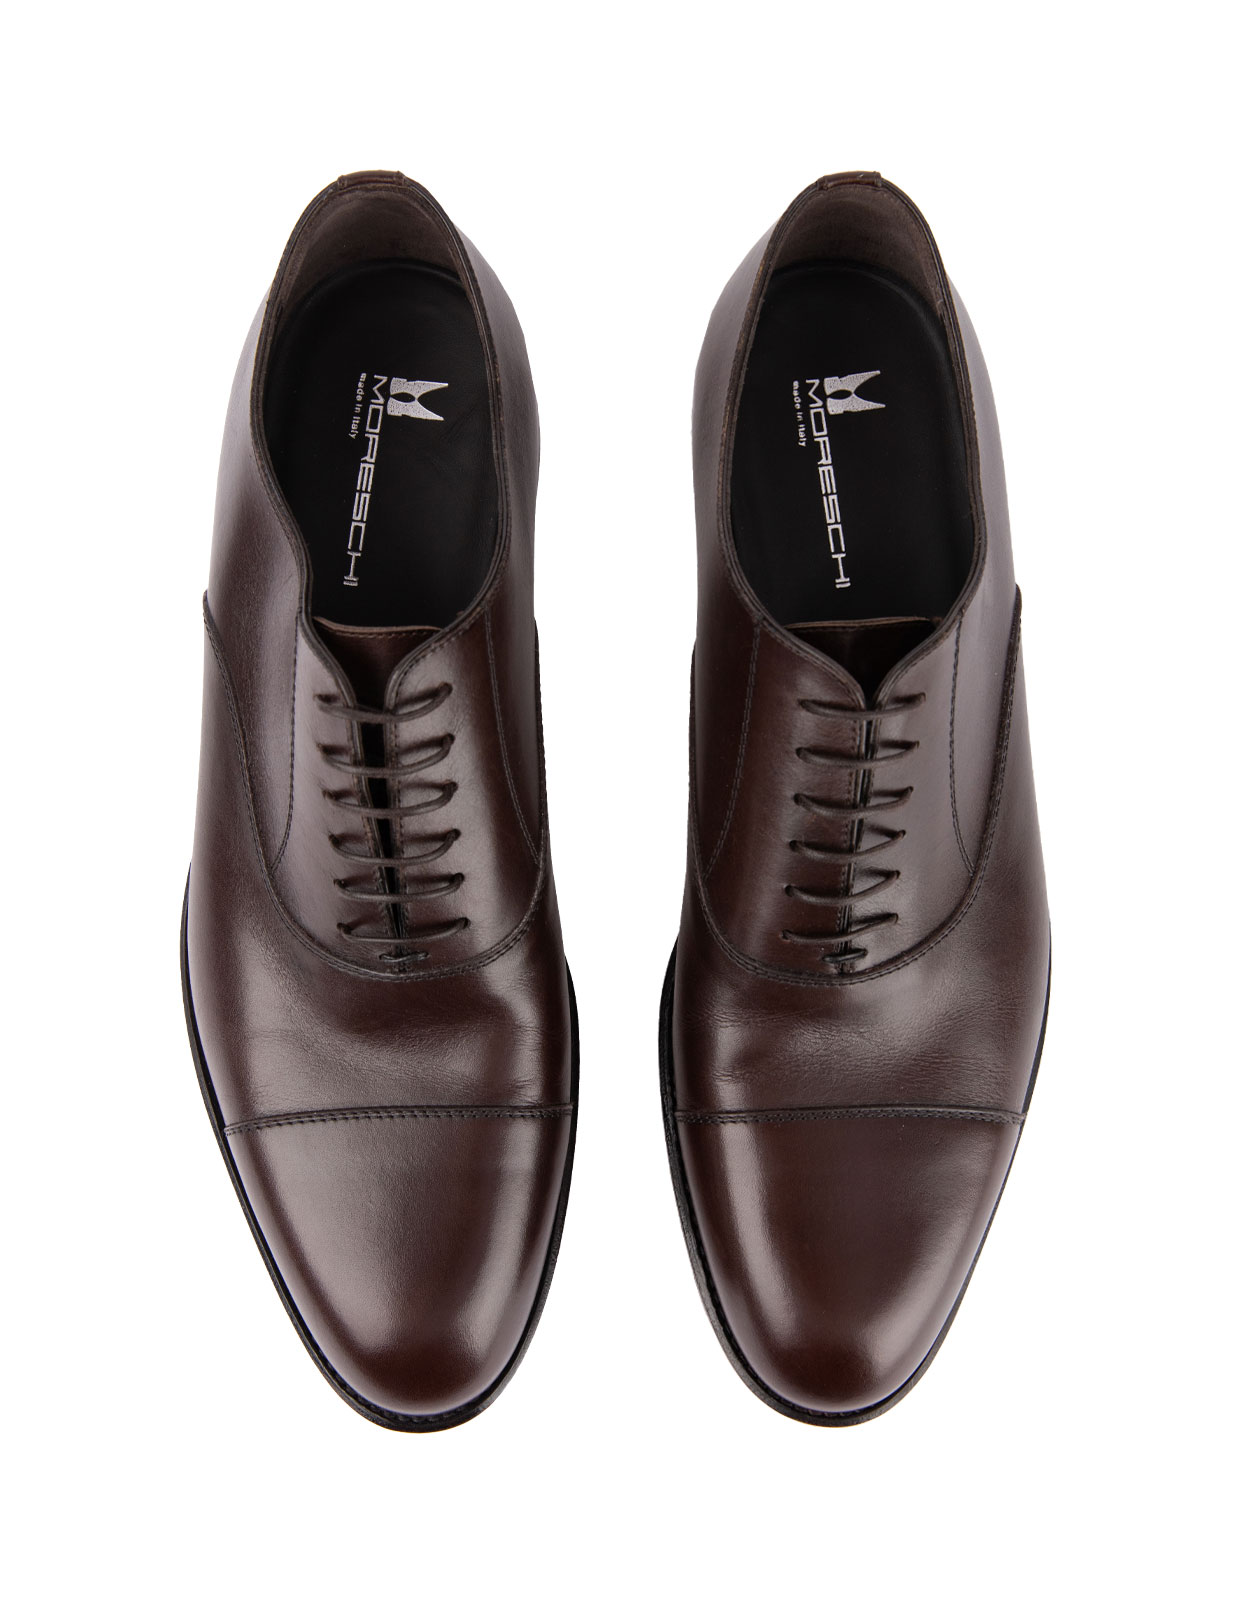 New York Oxford Shoes Calfskin Brown Stl 9.5